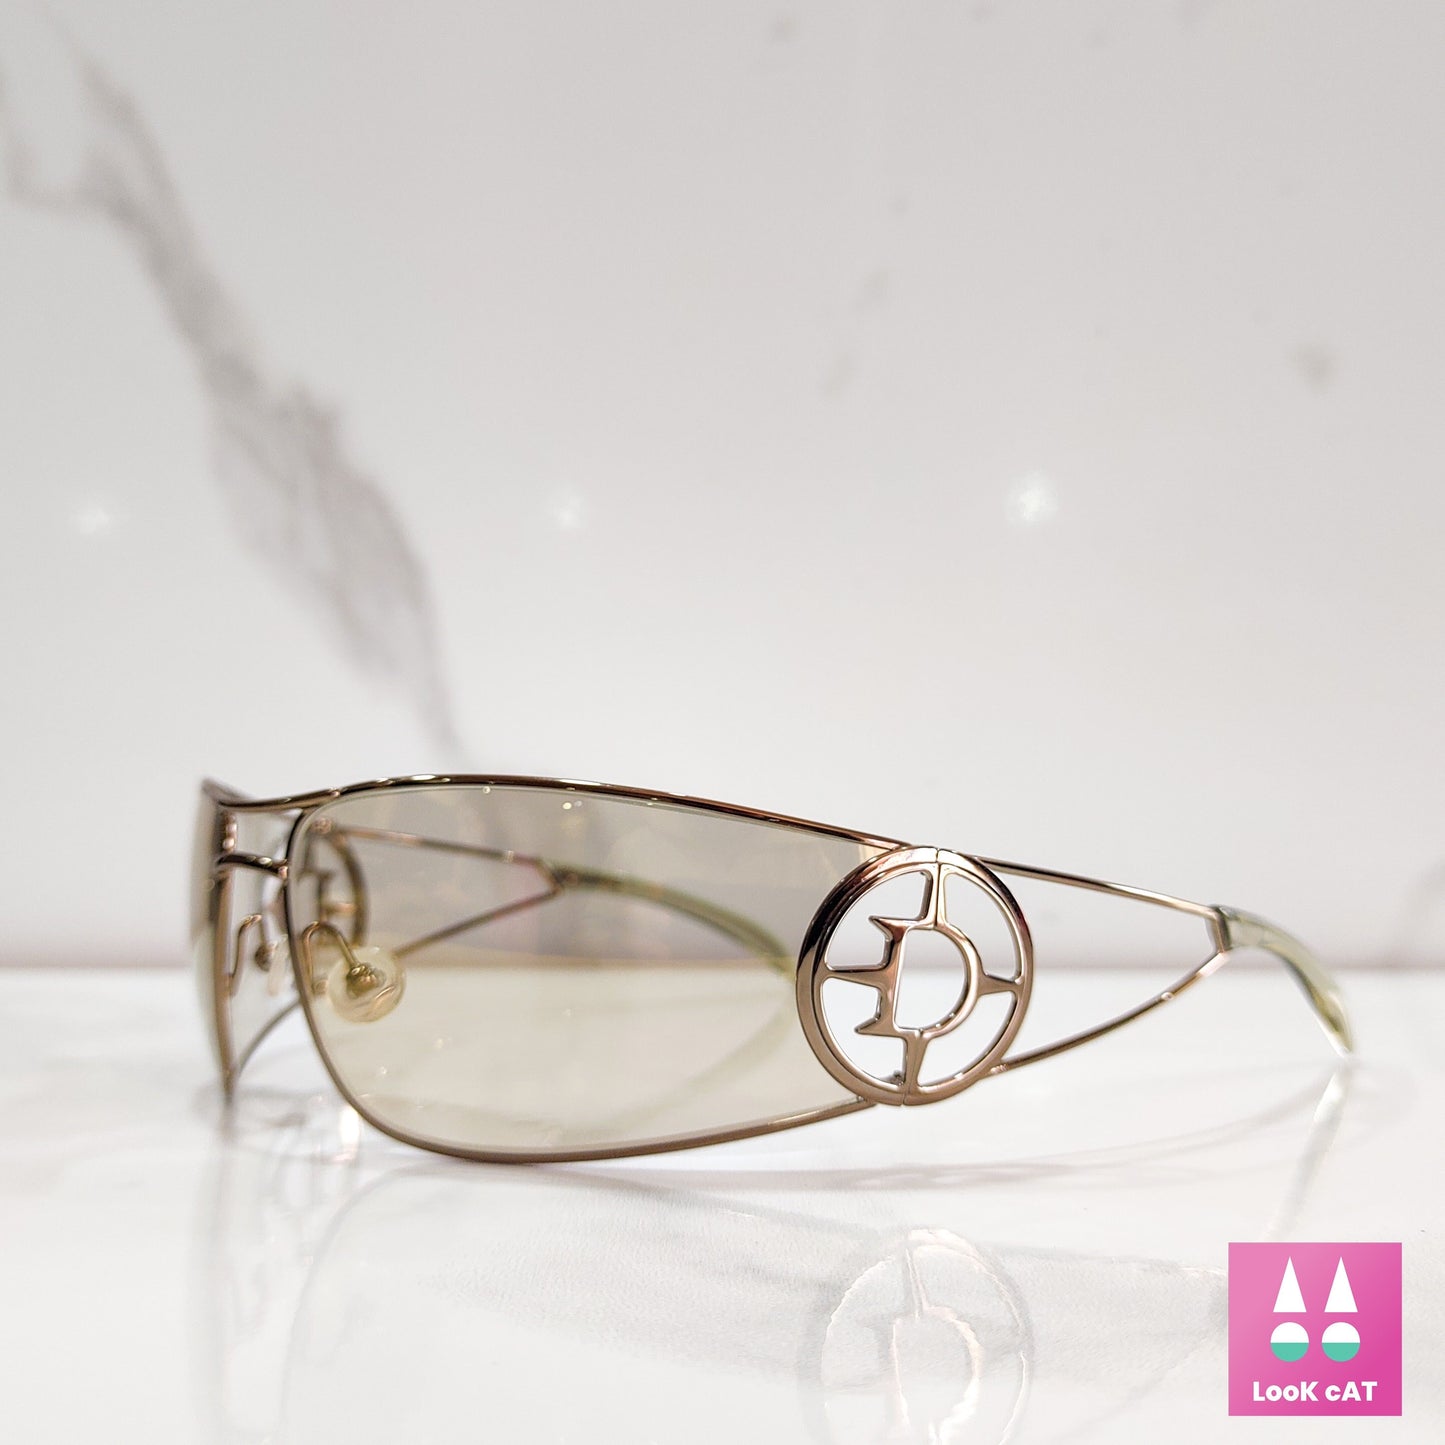 Christian Dior Calandre rari occhiali da sole vintage con scudo avvolgente occhiali gafas y2k Raro